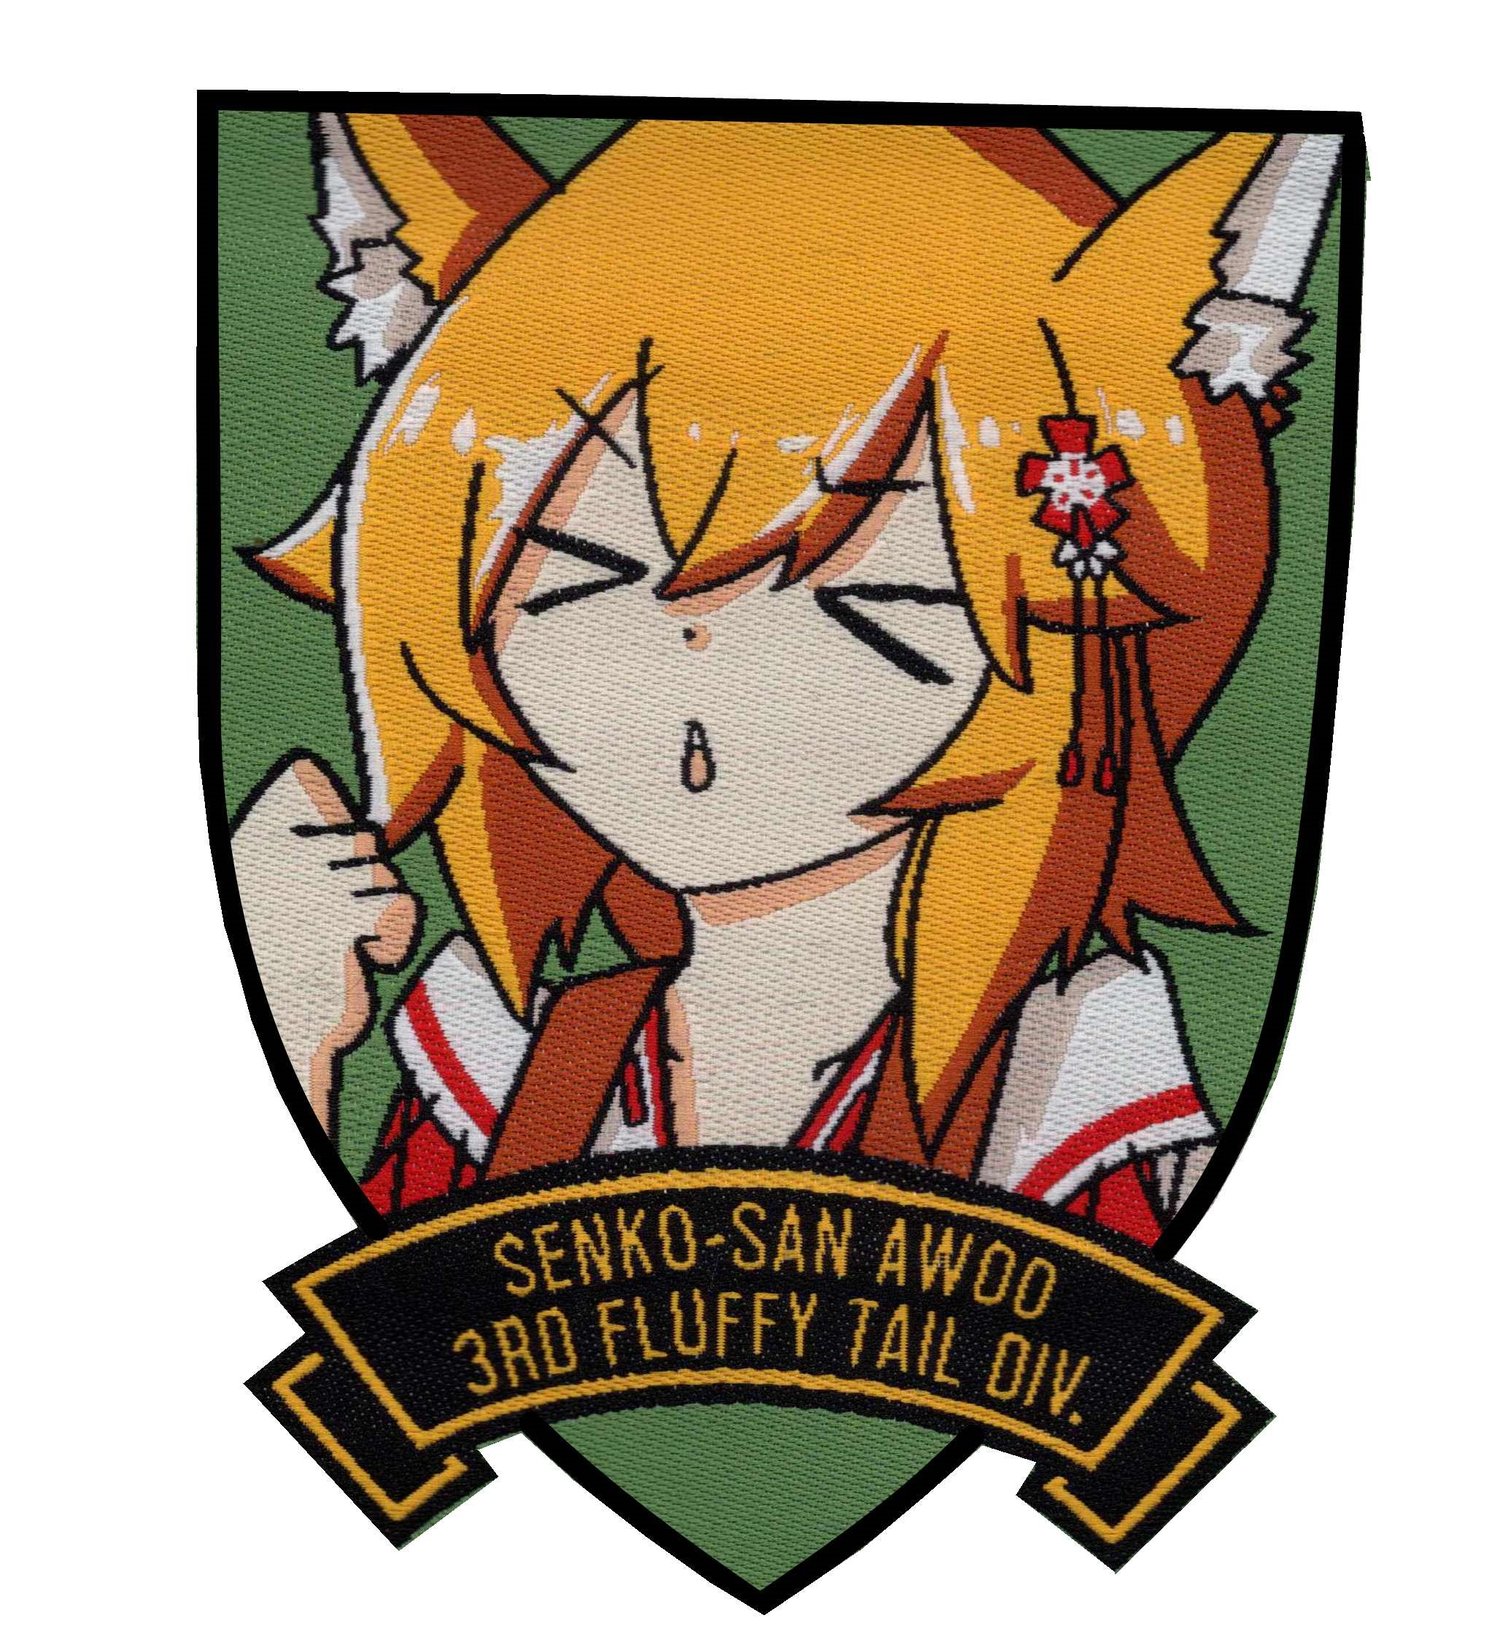 Senko-San 3rd Fluffy Tail Div.